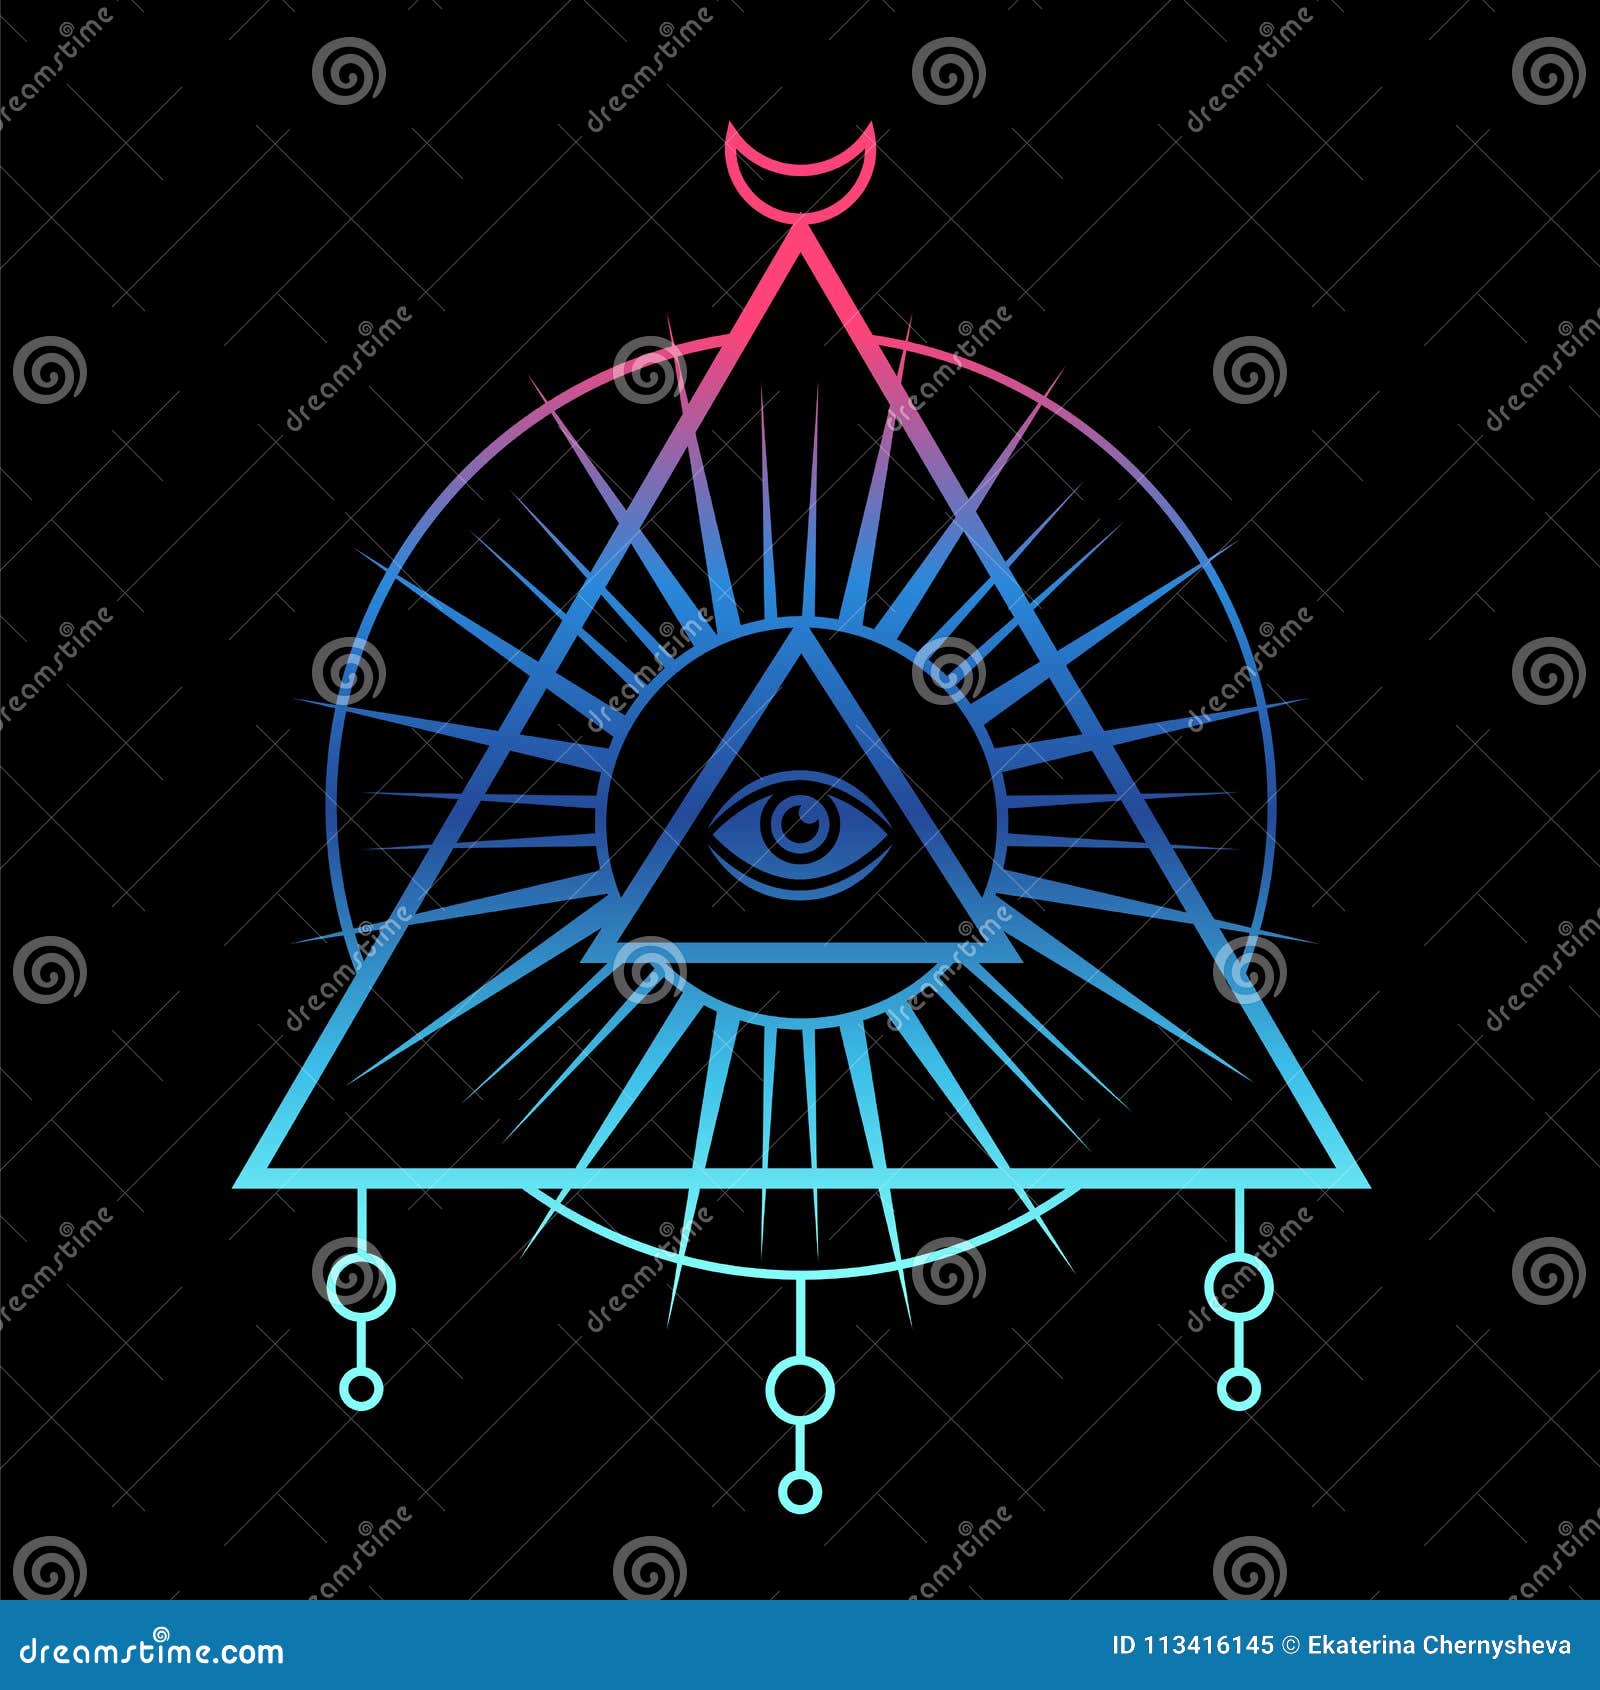 Sacred geometry, third eye stock vector. Illustration of masonic - 113416145